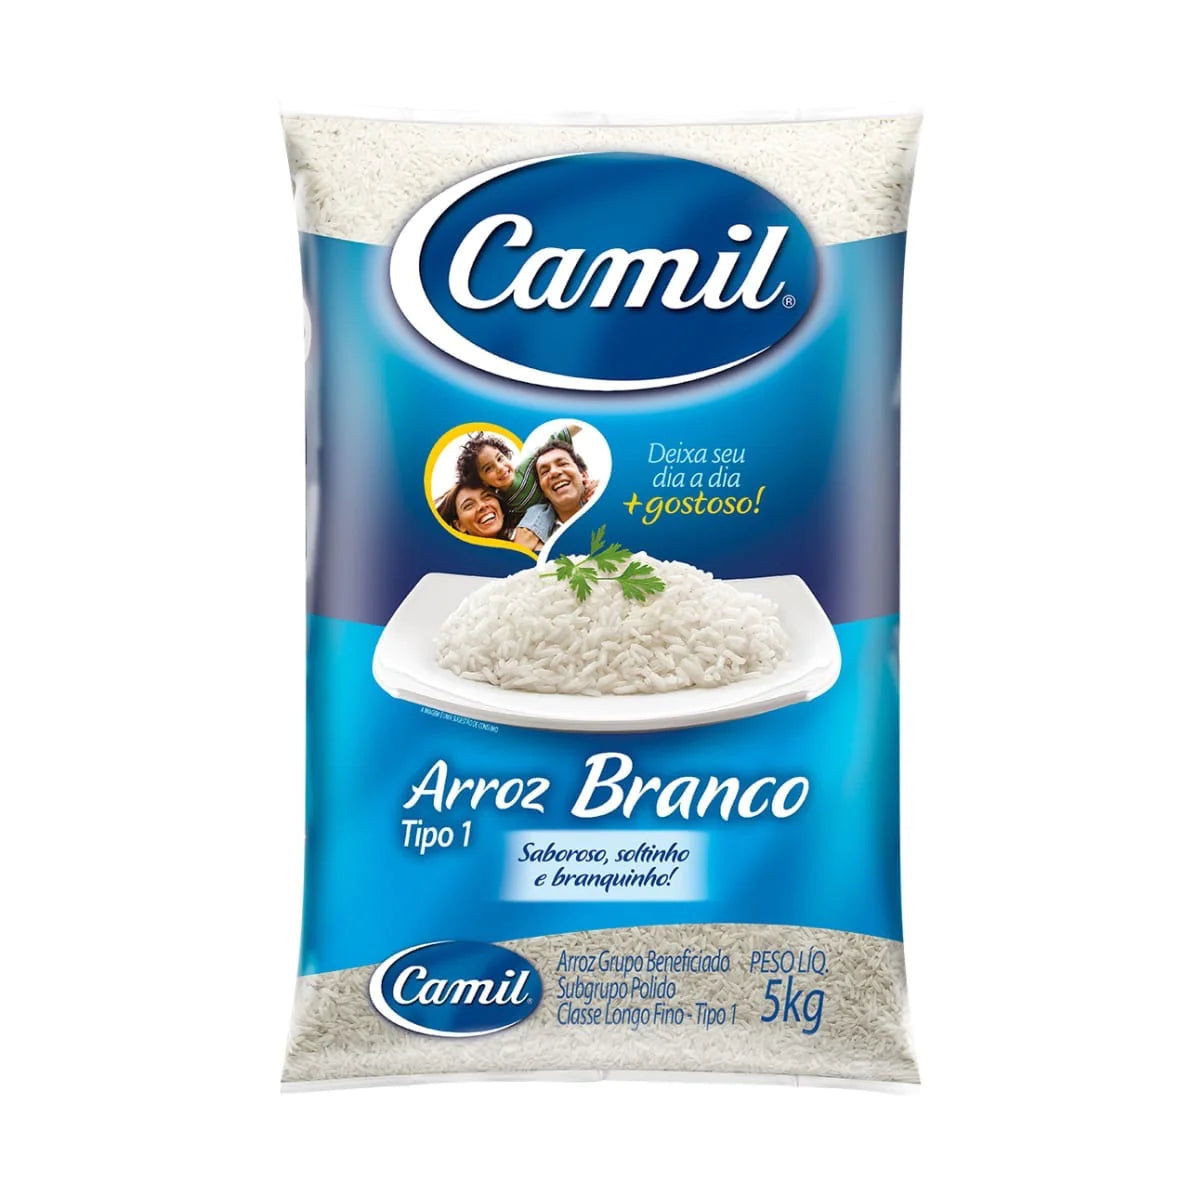 CAMIL - White rice - 1kg